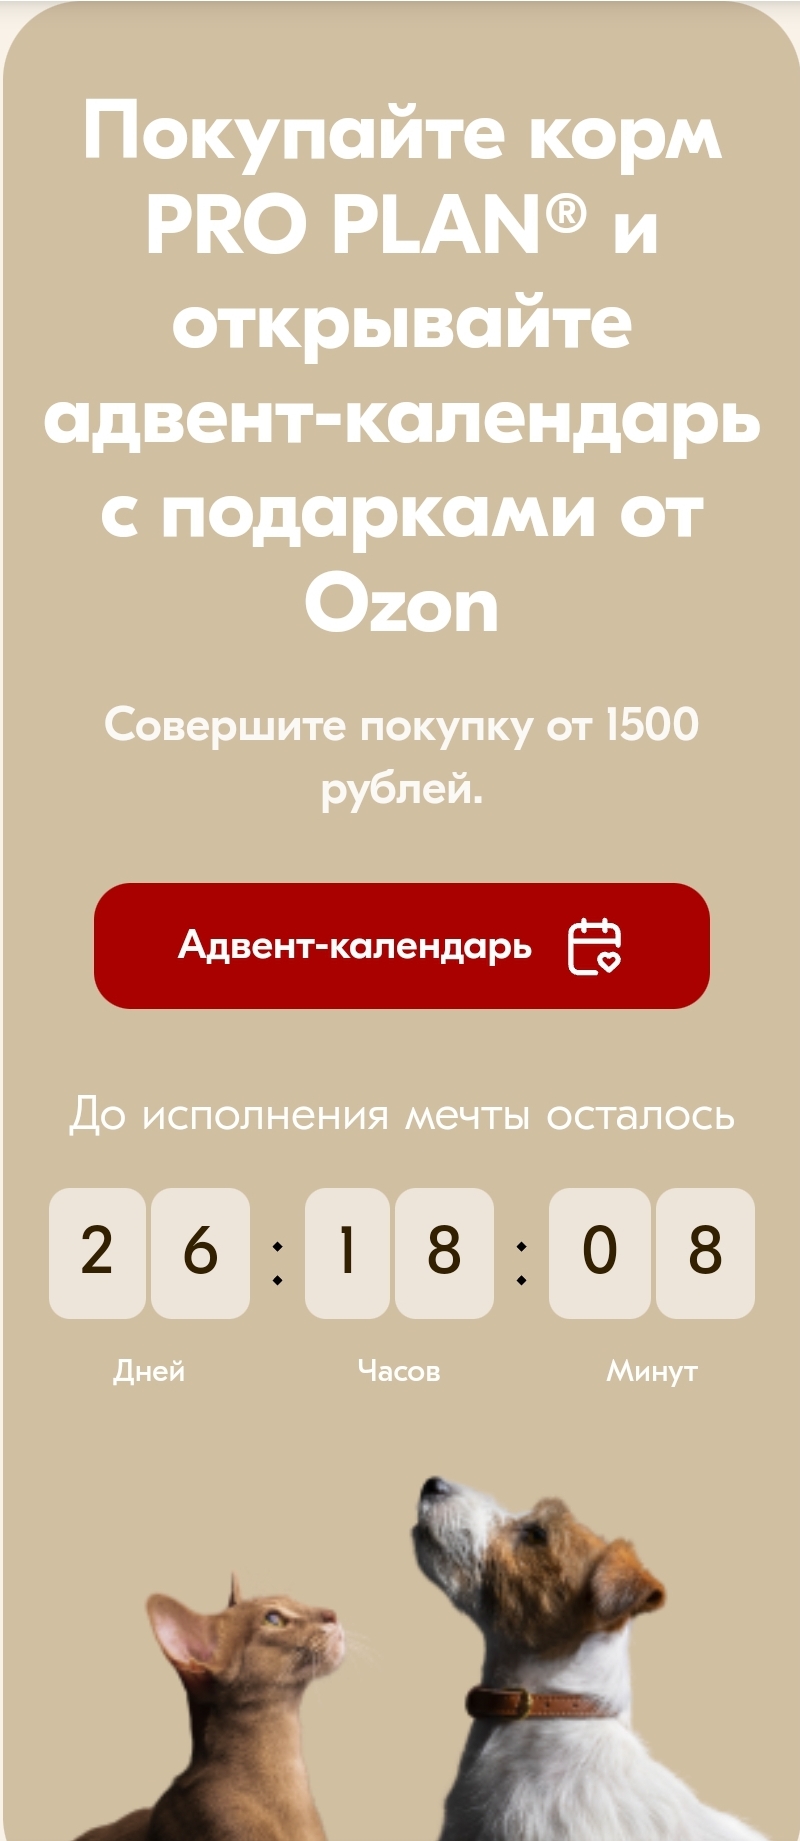 «Адвент-календарь» от Pro Plan и Ozon.ru